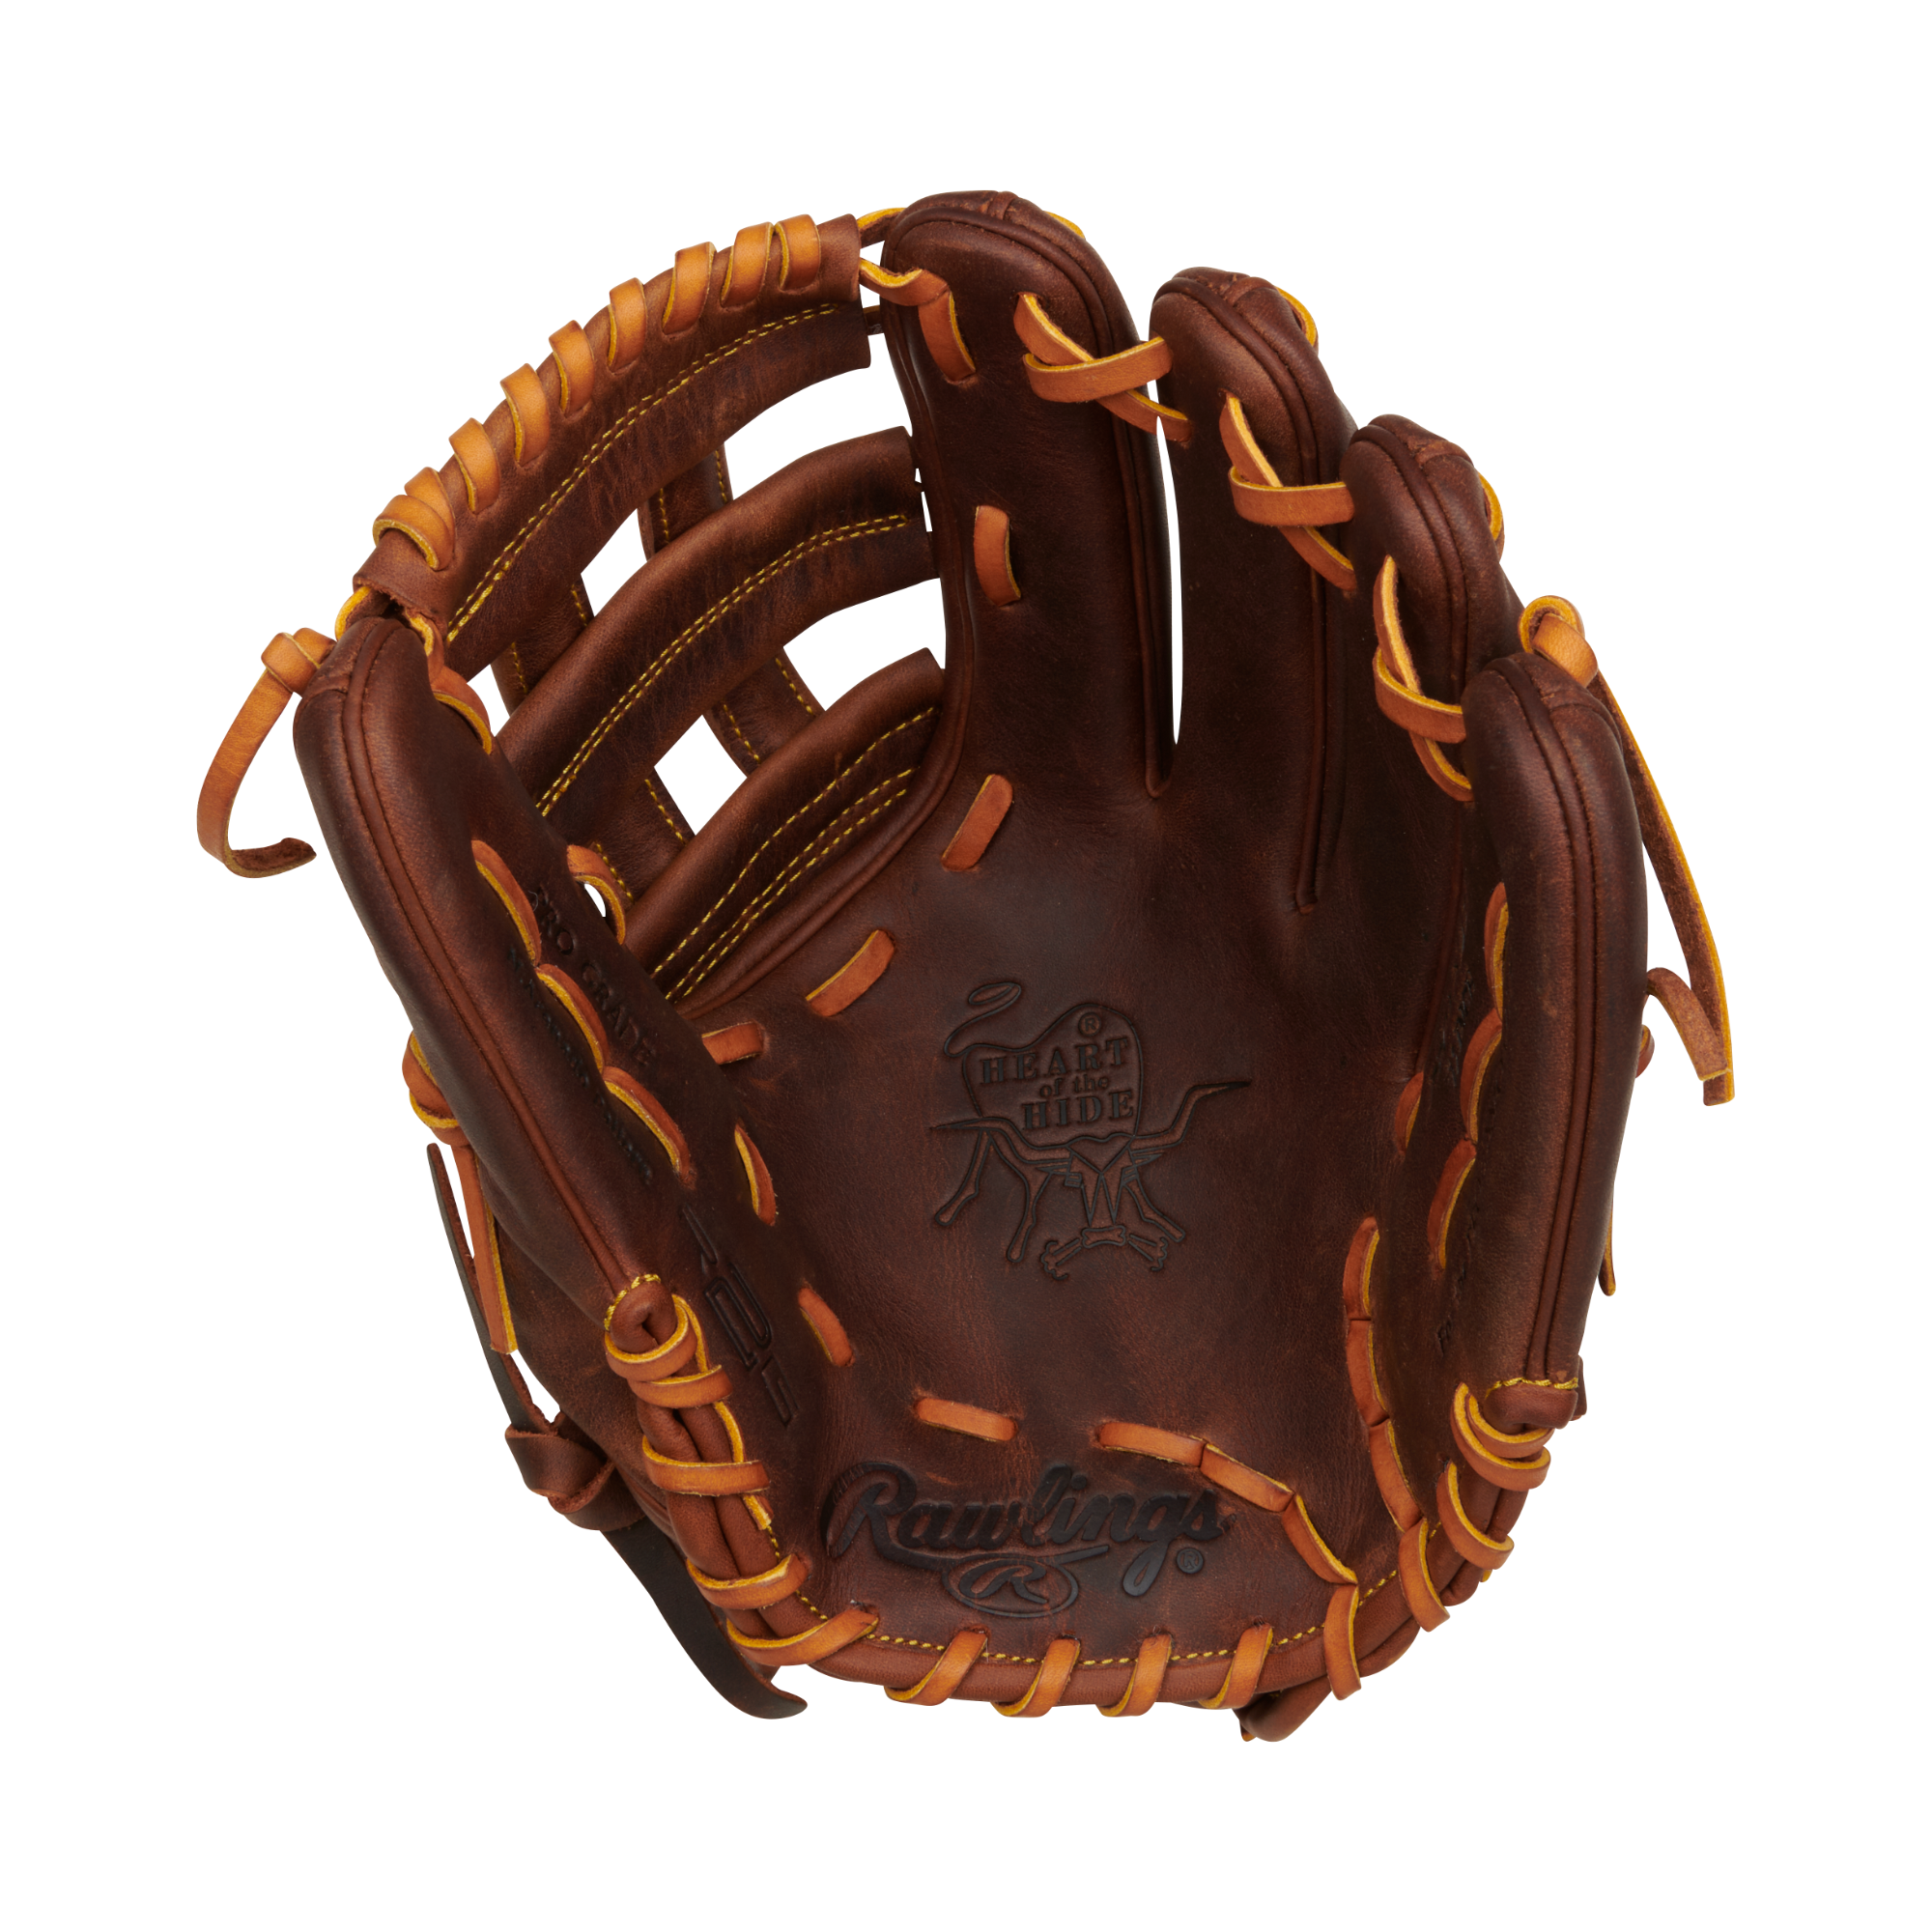 Rawlings Heart Of The Hide Series Baseball Glove 12" RHT